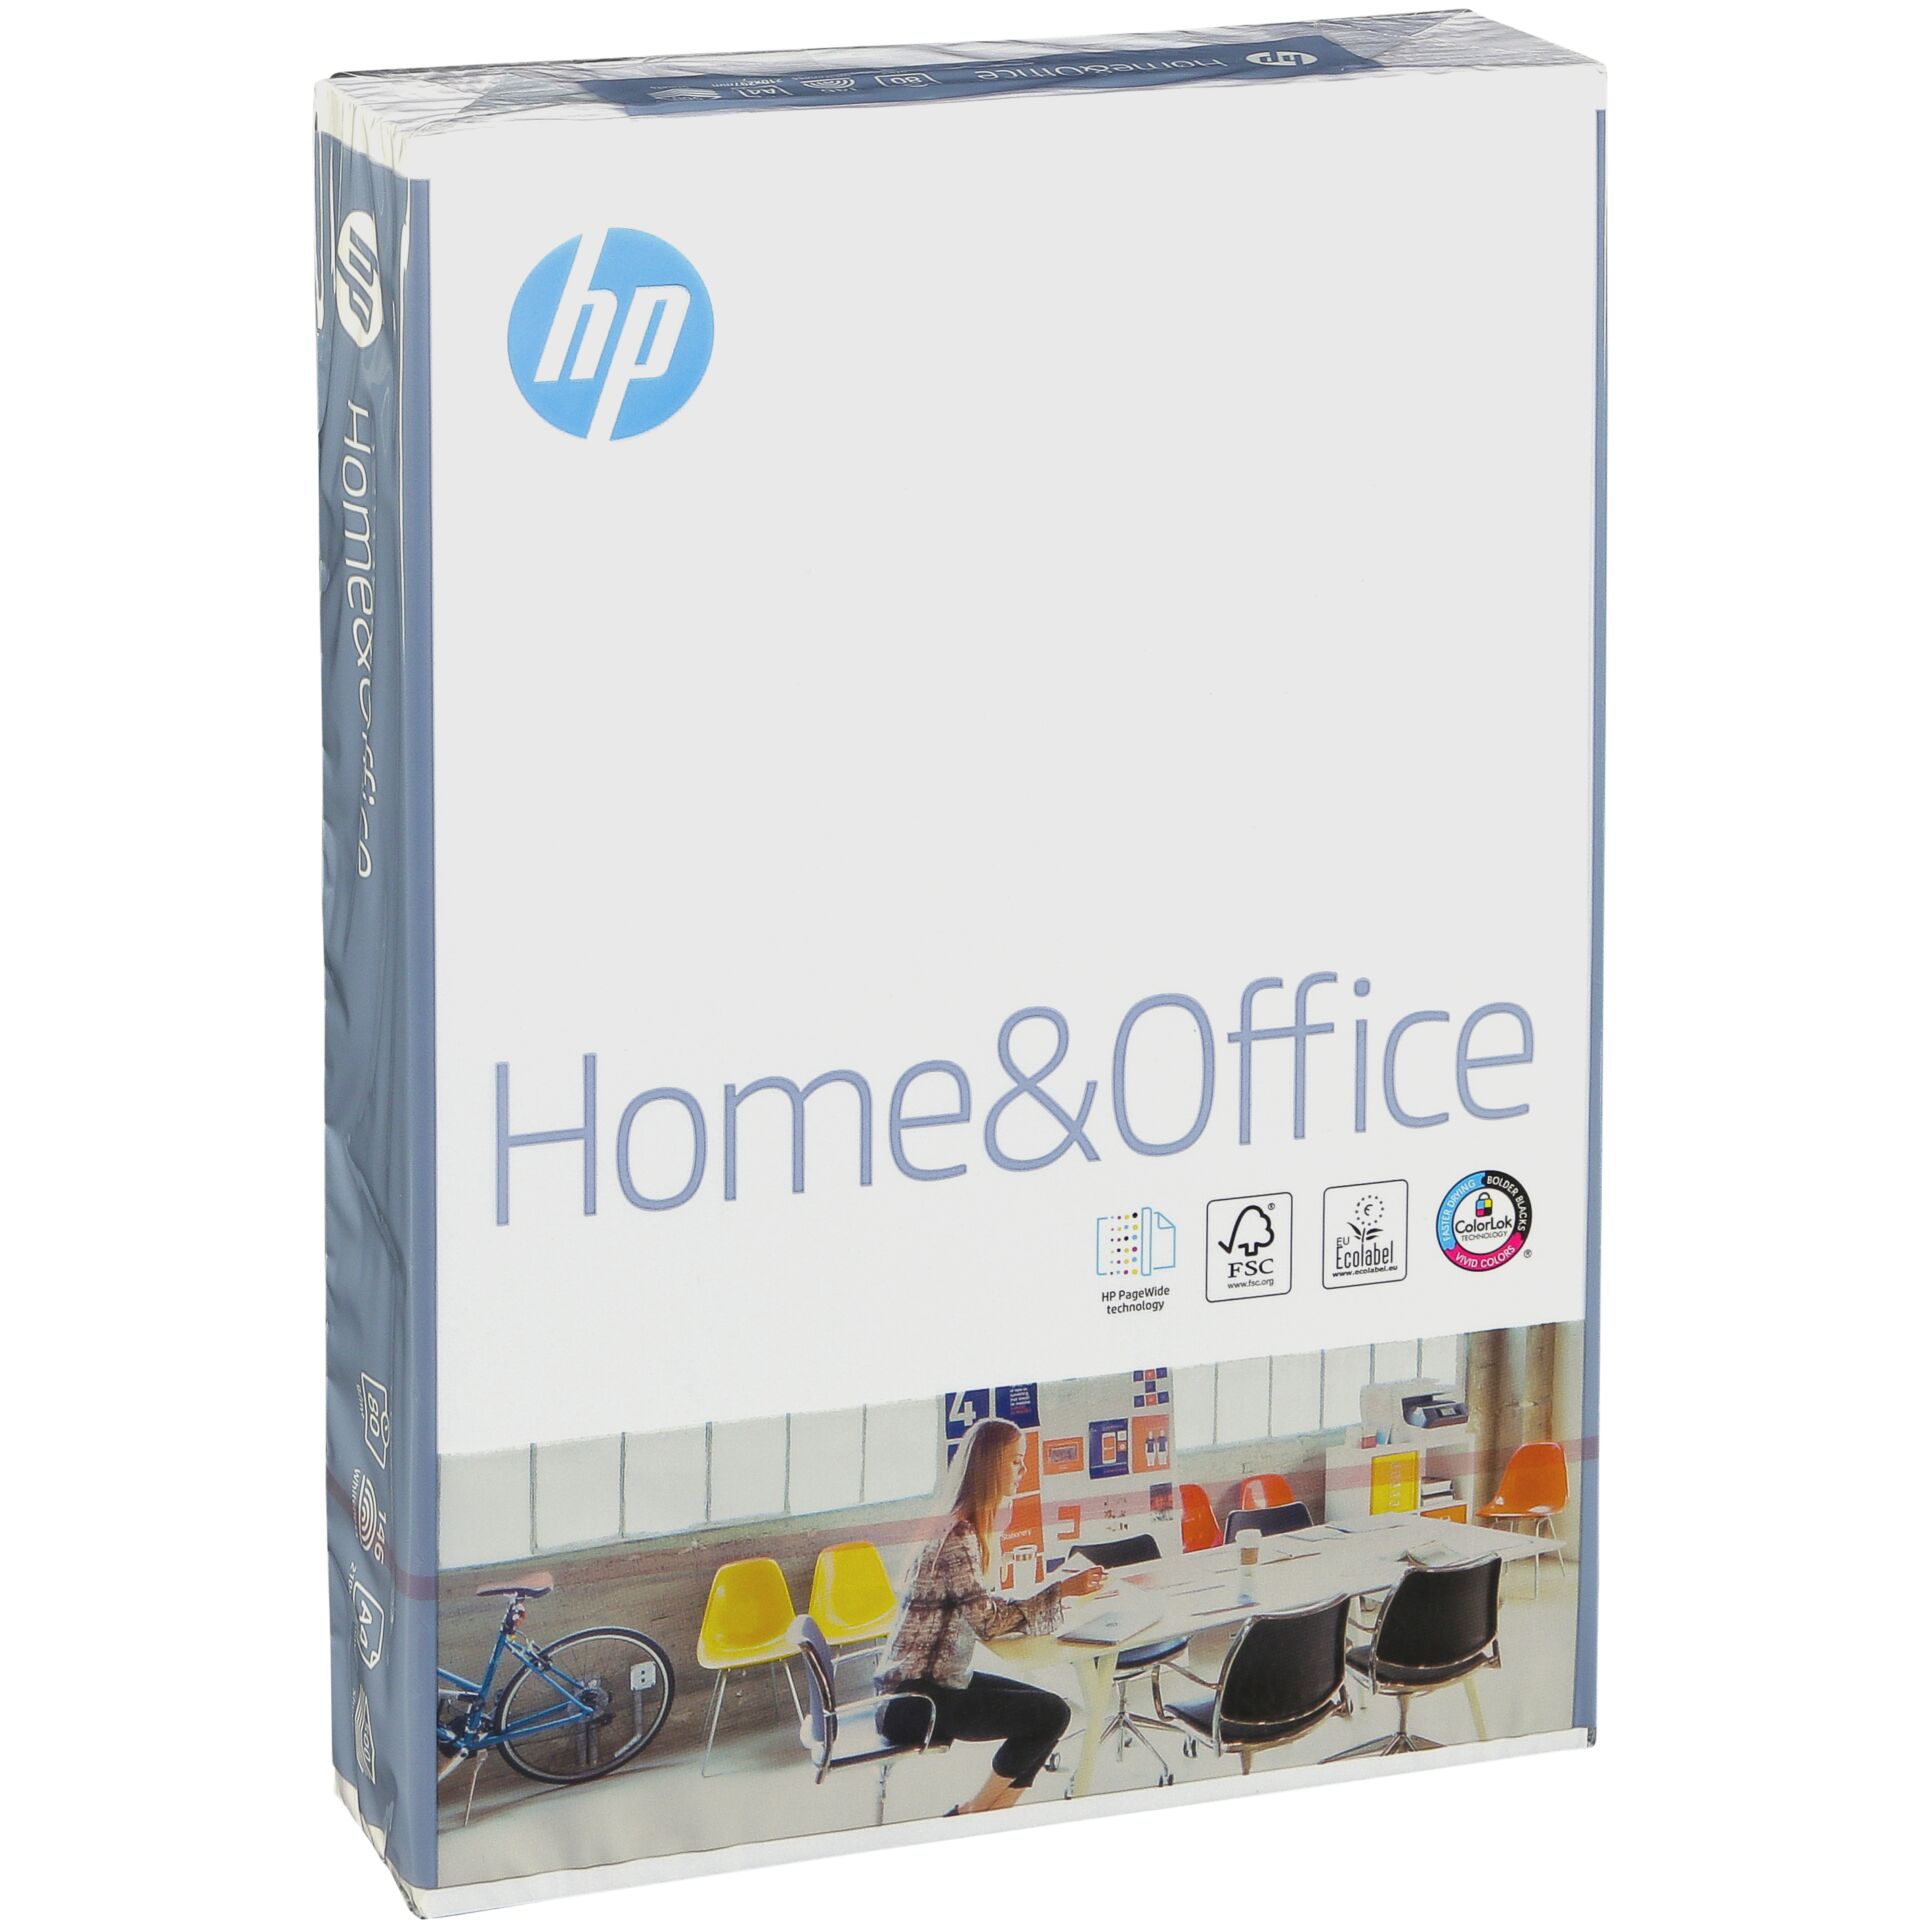 HP Home & Office carta A 4, 80 g, 500 fogli     CHP 150